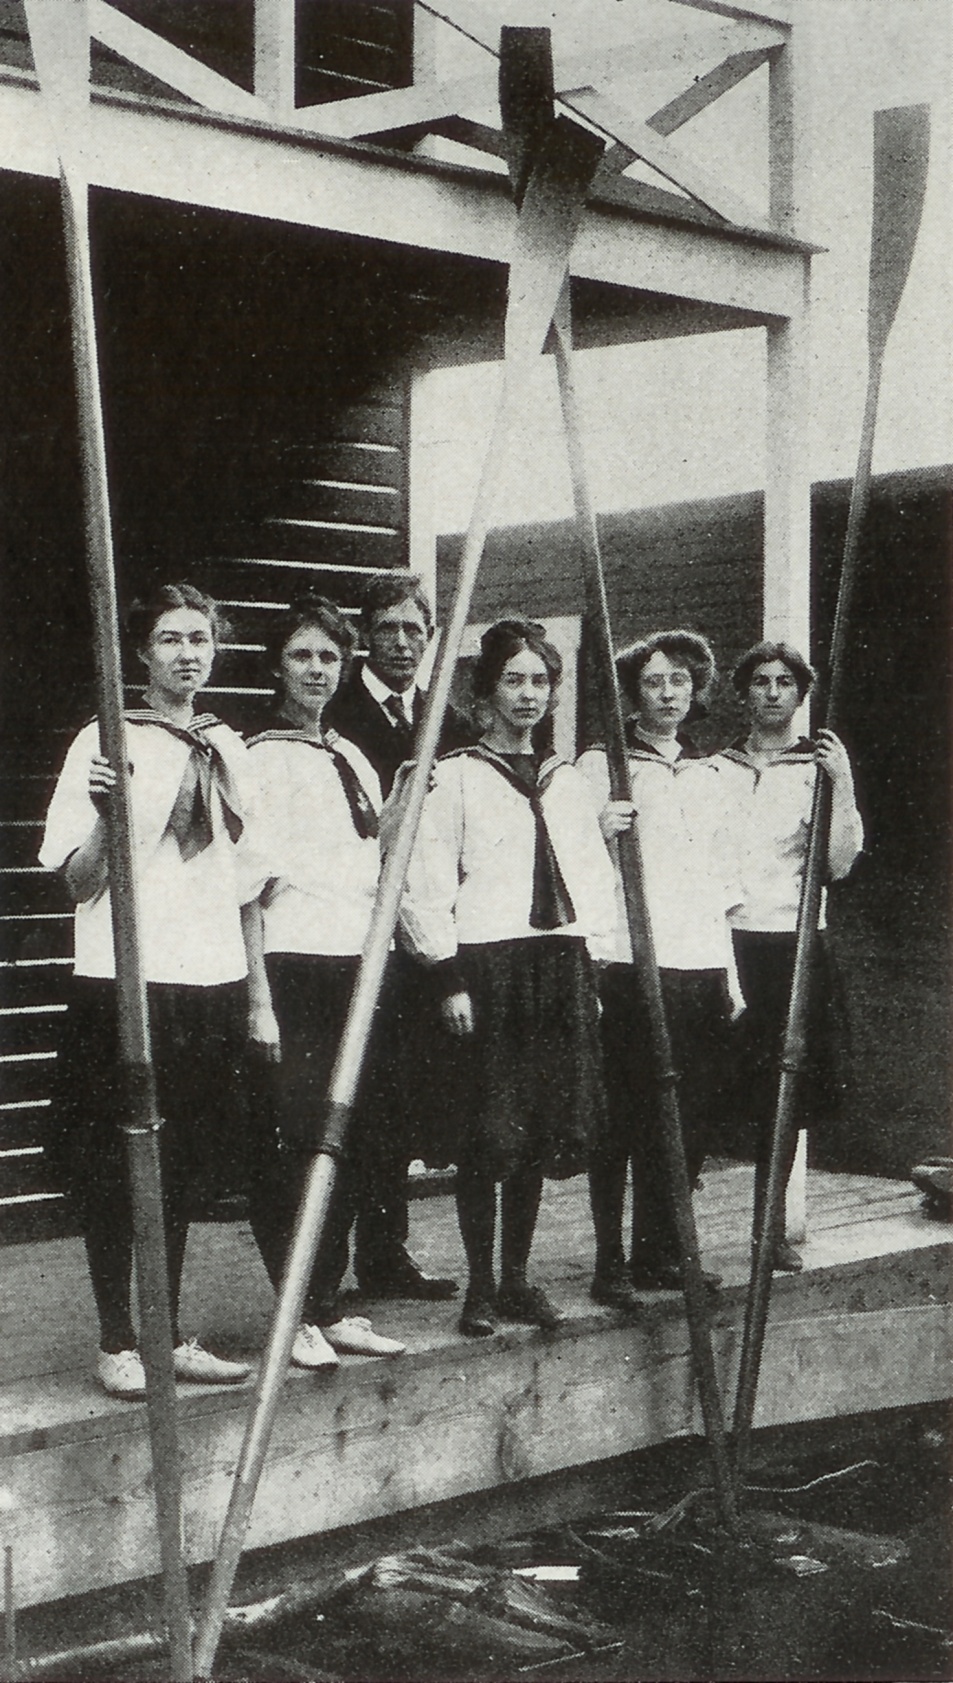 Photo of Womens Crew Team